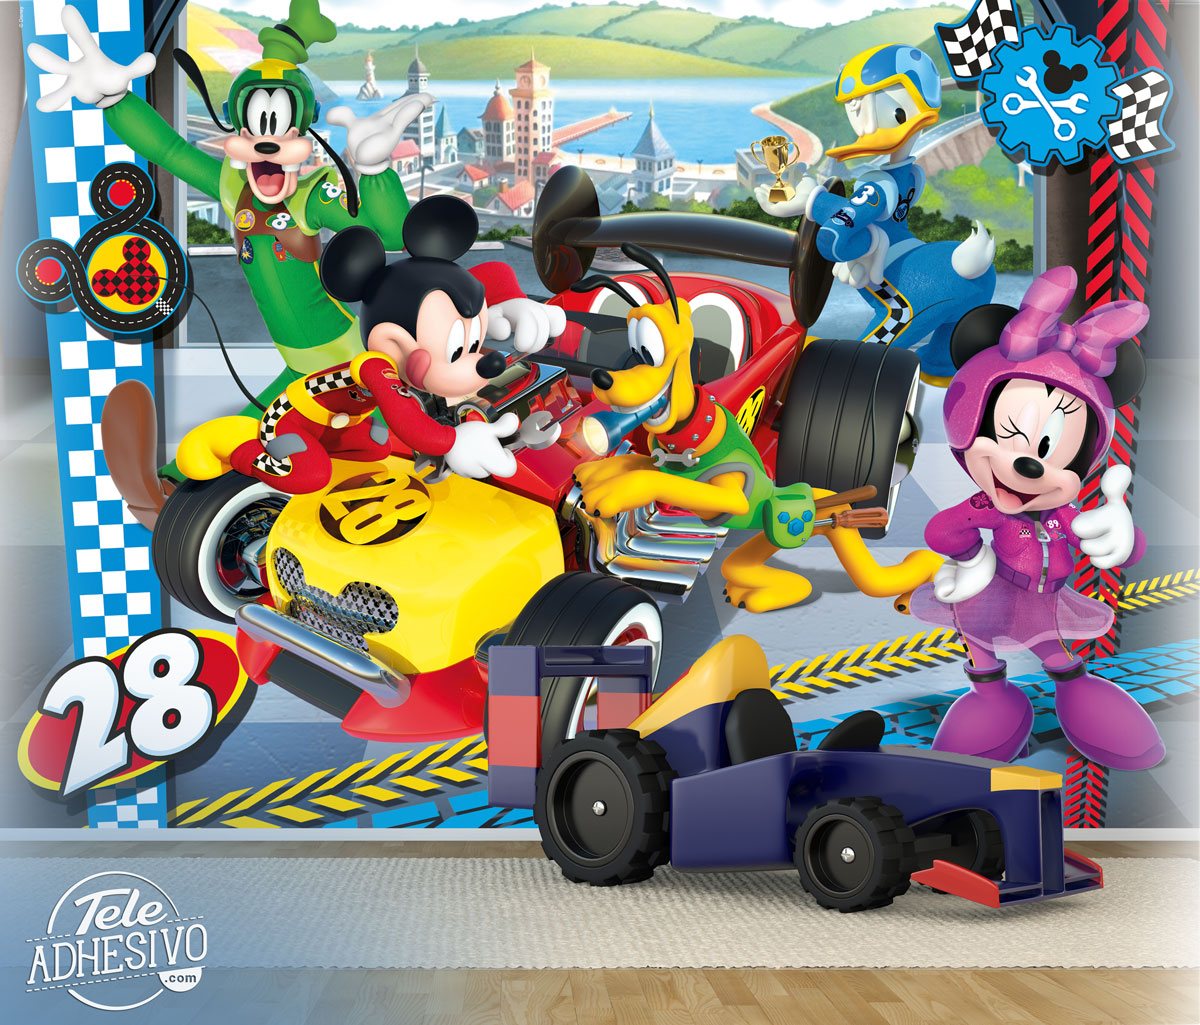 Poster xxl: Équipement mécanique Disney